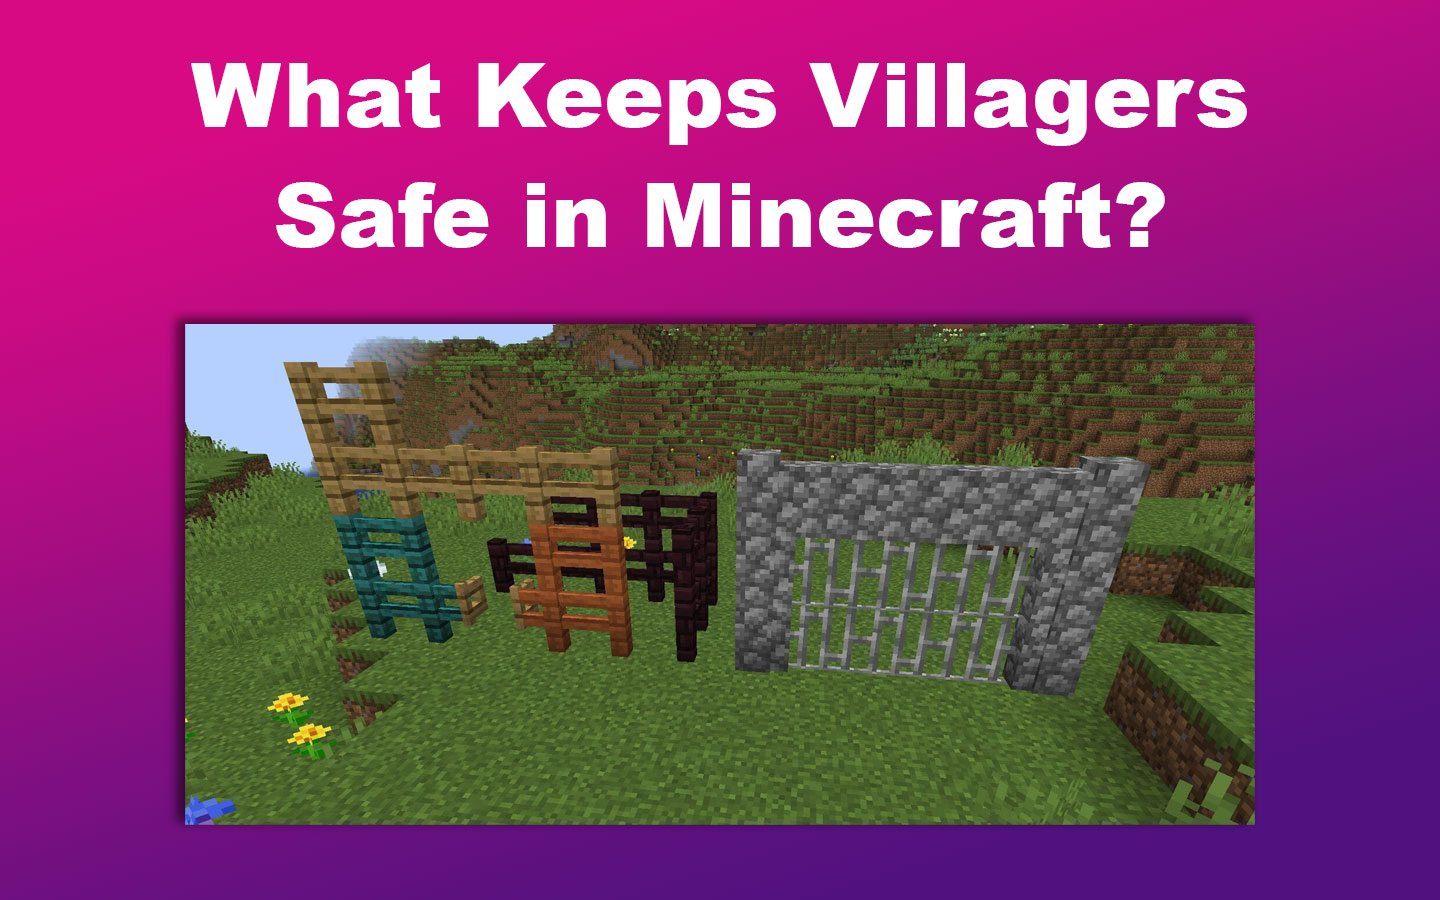 What Keep Villagers Safe in Minecraft?